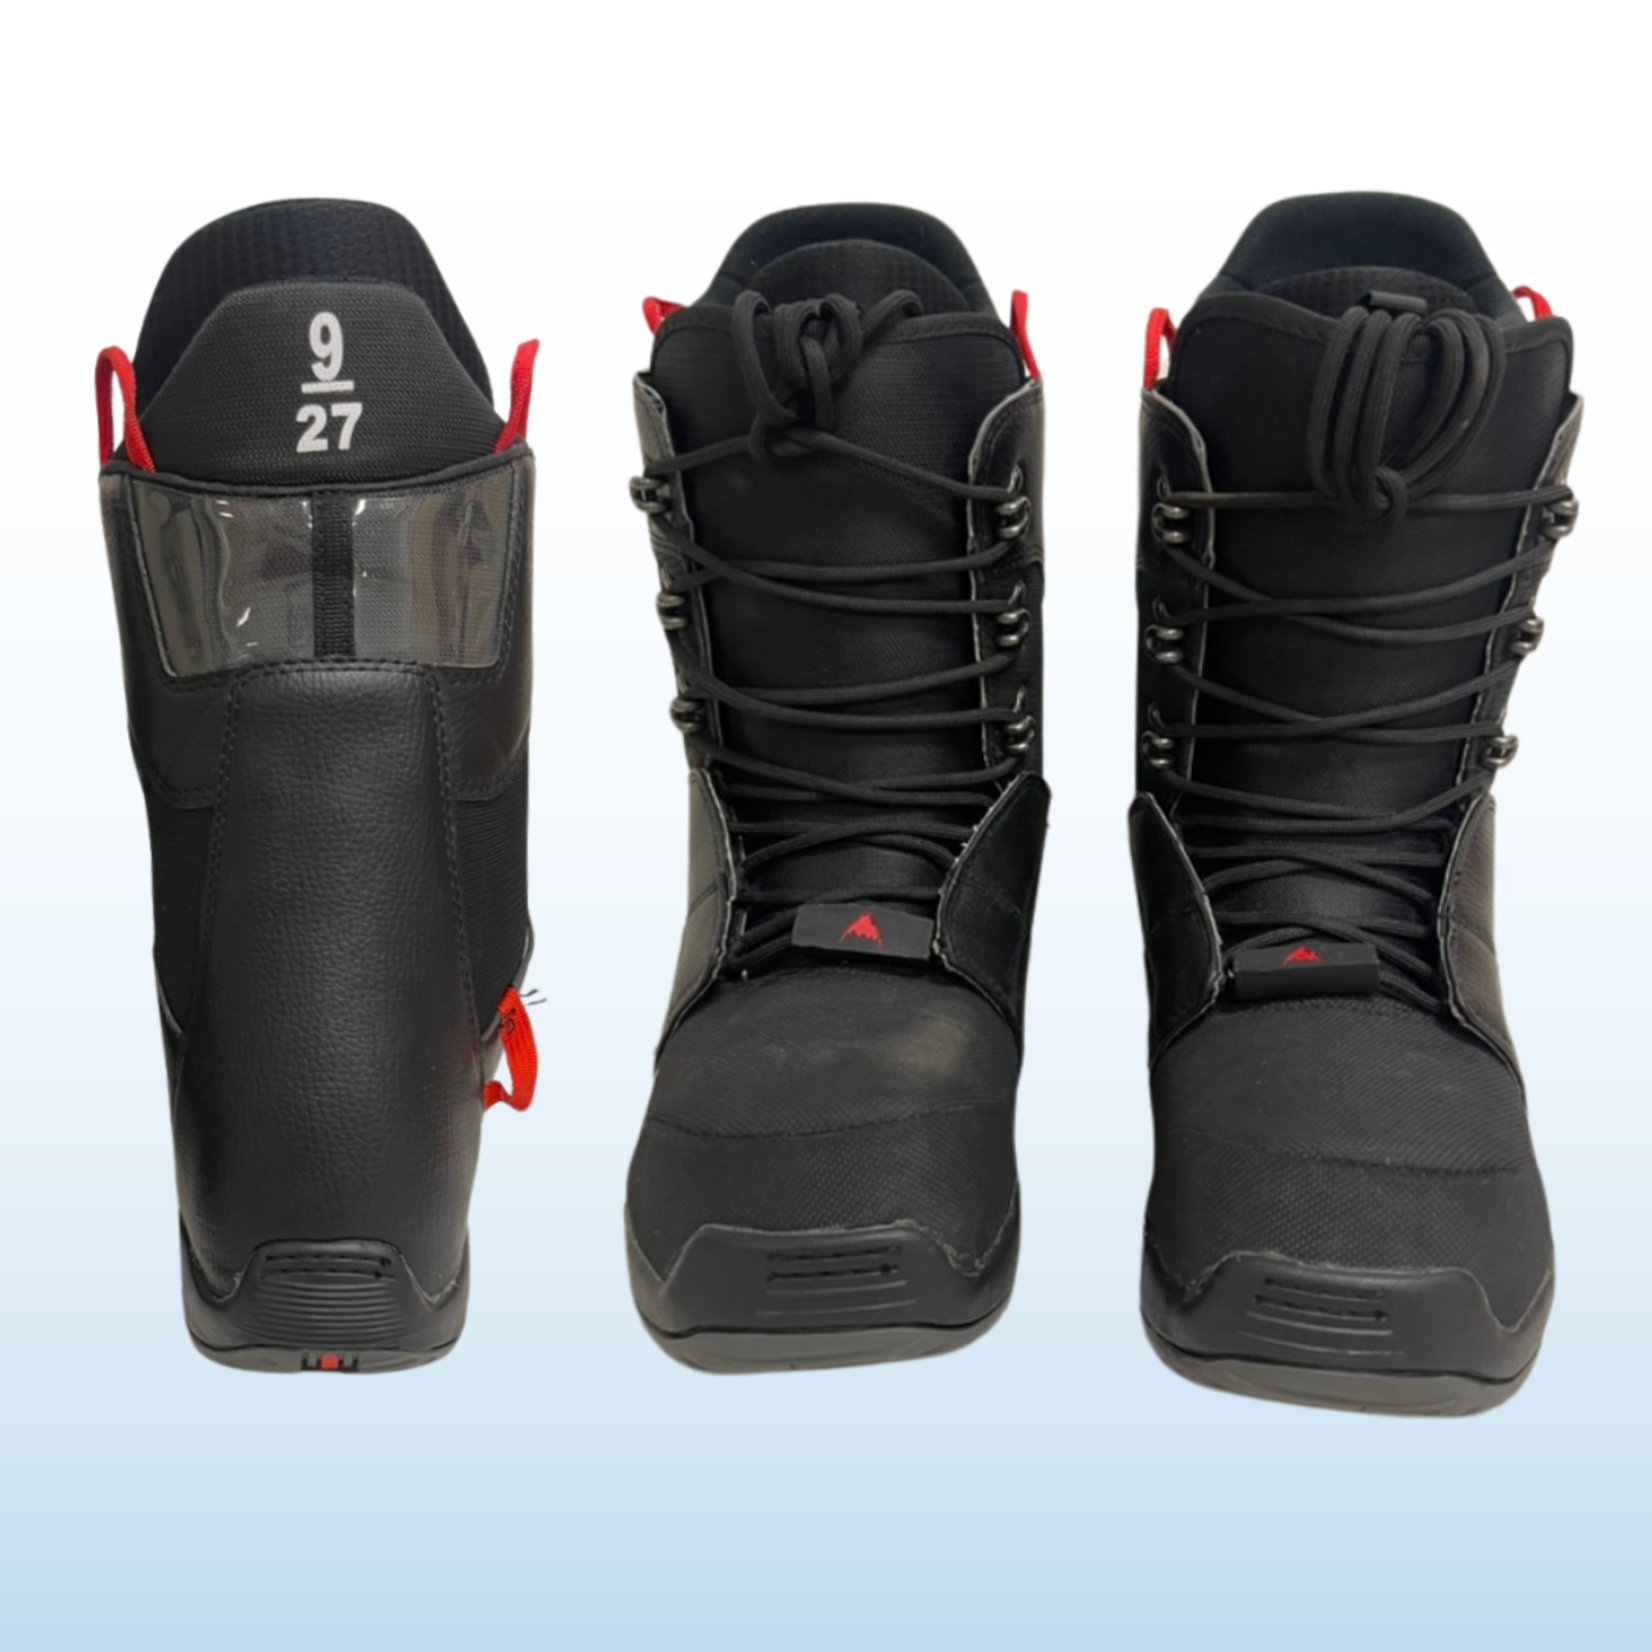 Burton Burton Progression Snowboard Boots, Size 9